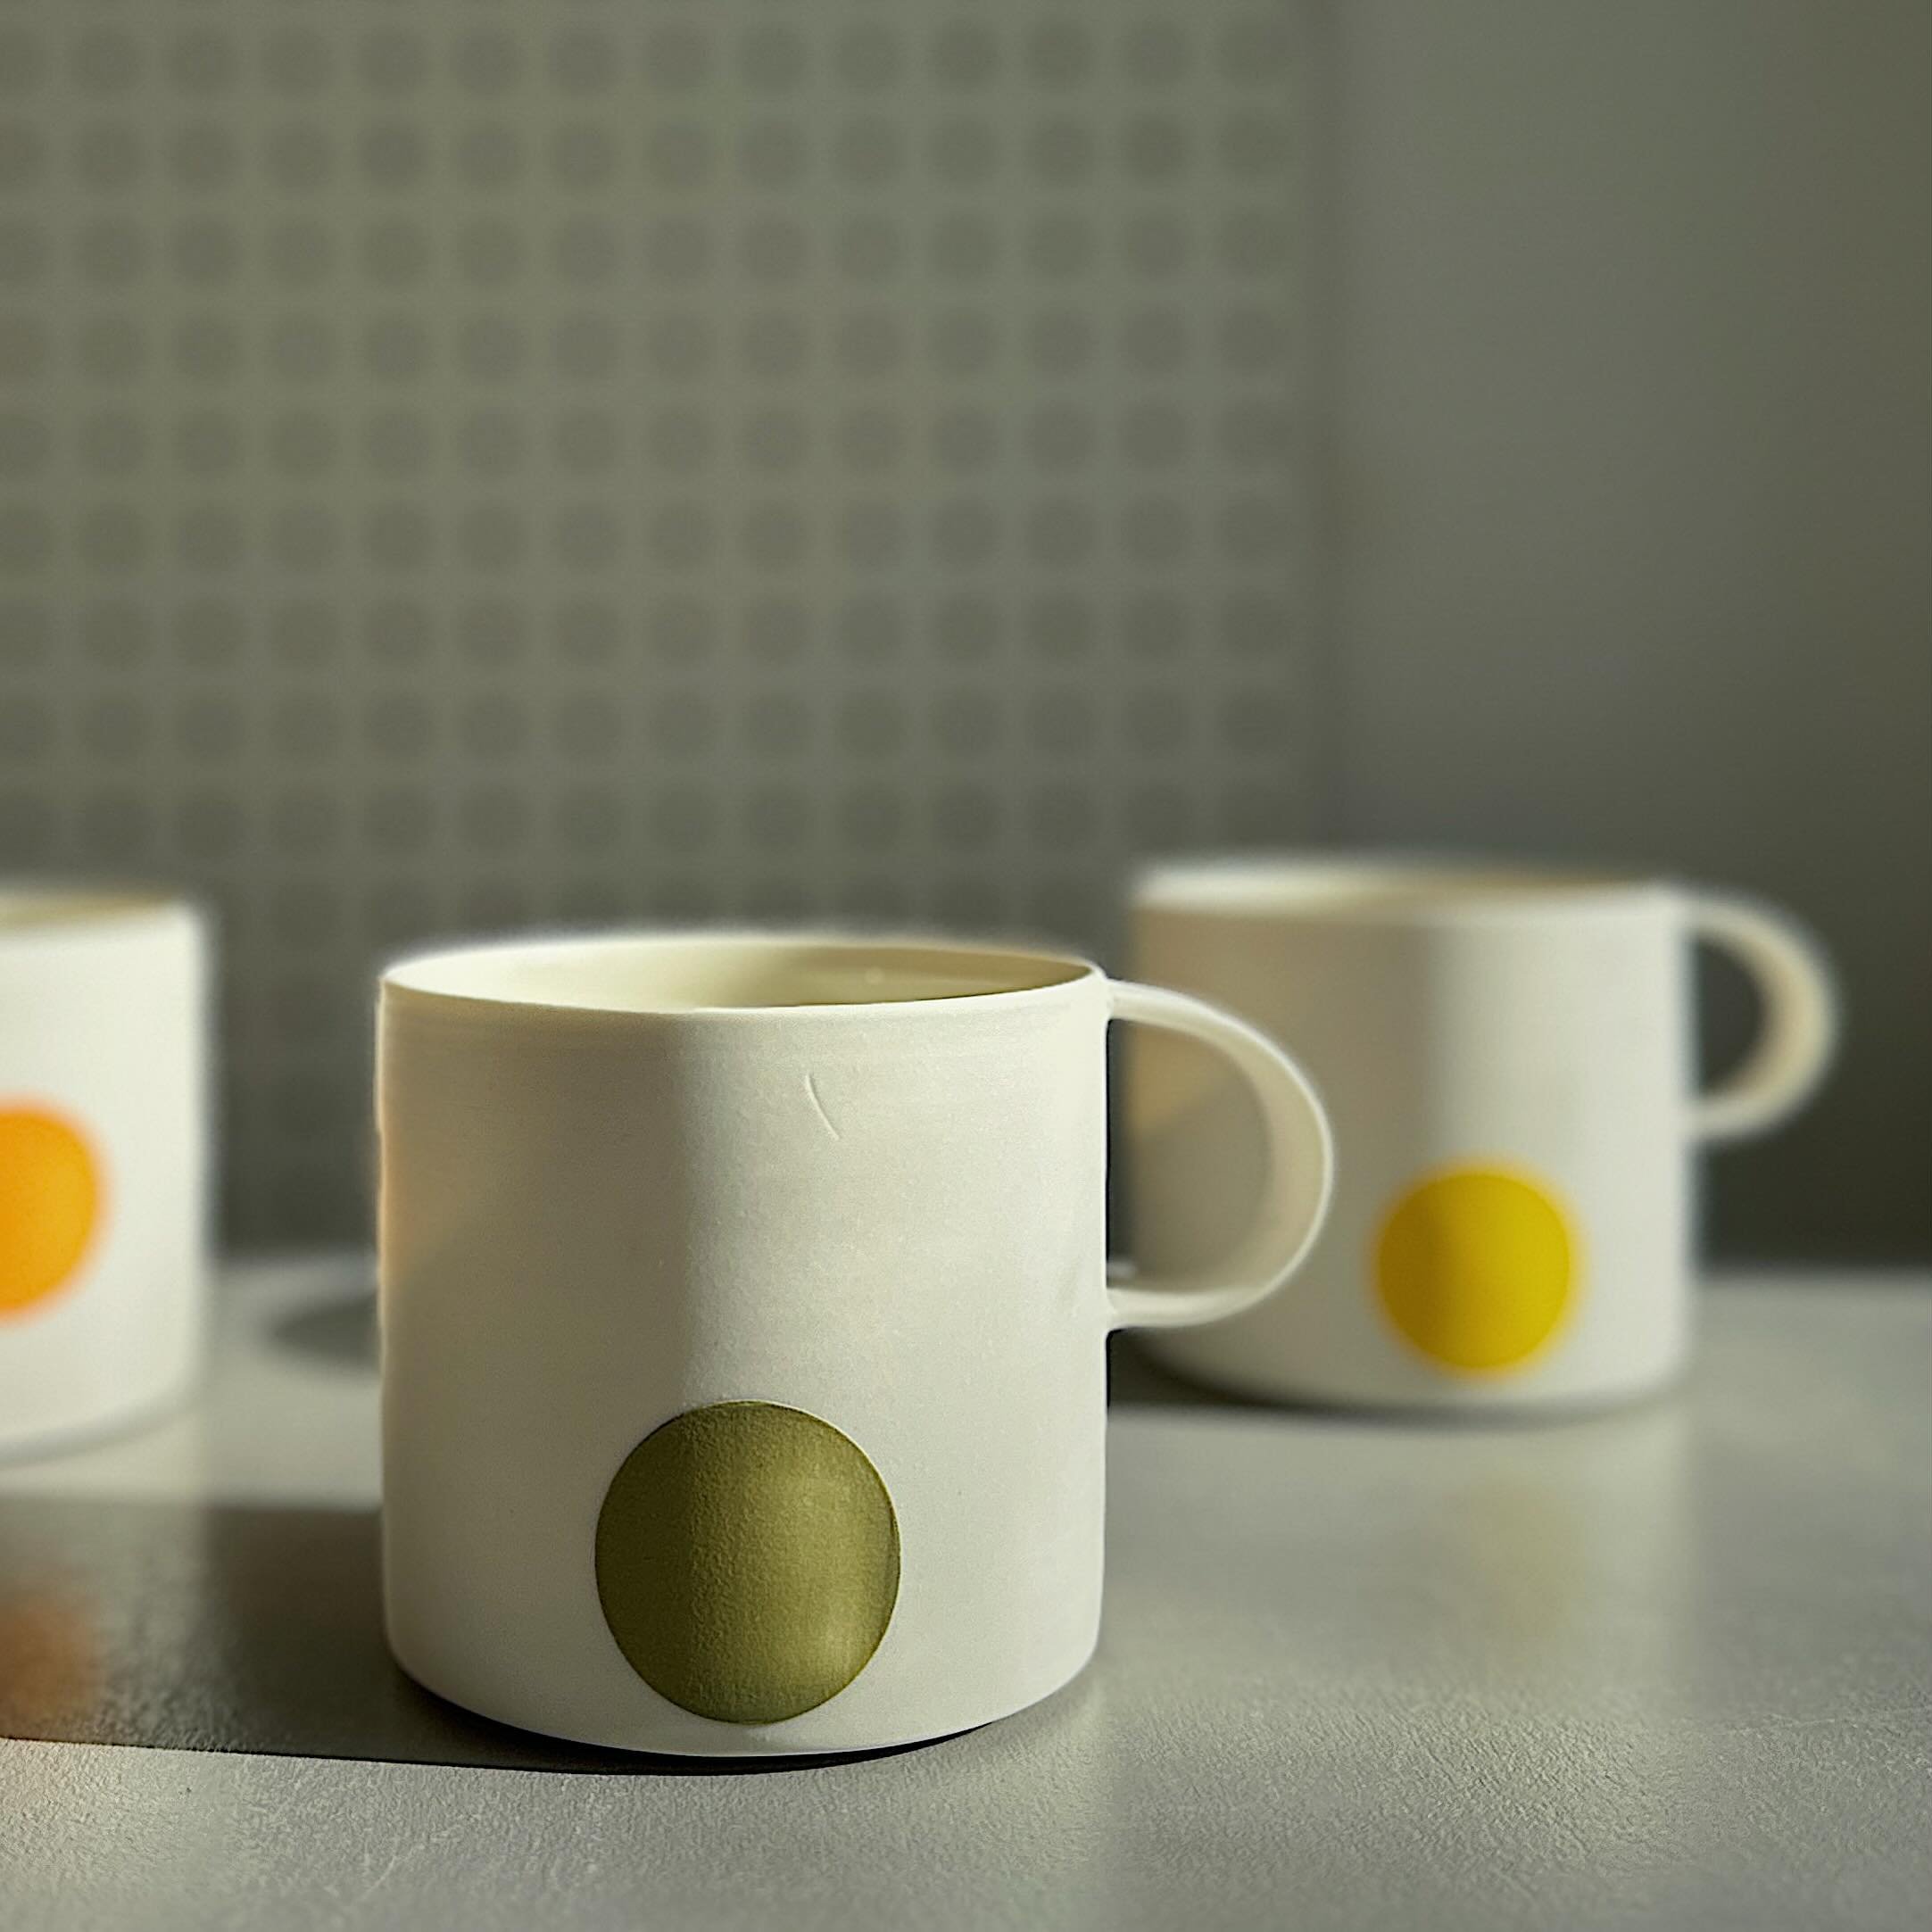 Olive green dot
.
.
.
.
#handmade #wheelthrown #porcelain #mug #mugshot #pottery #slipware #bythelinepottery #porcelainpottery #modernceramics #studiopotter #maker #contemporaryceramics #madeinlondon #ceramics #craft #ceramicdesign